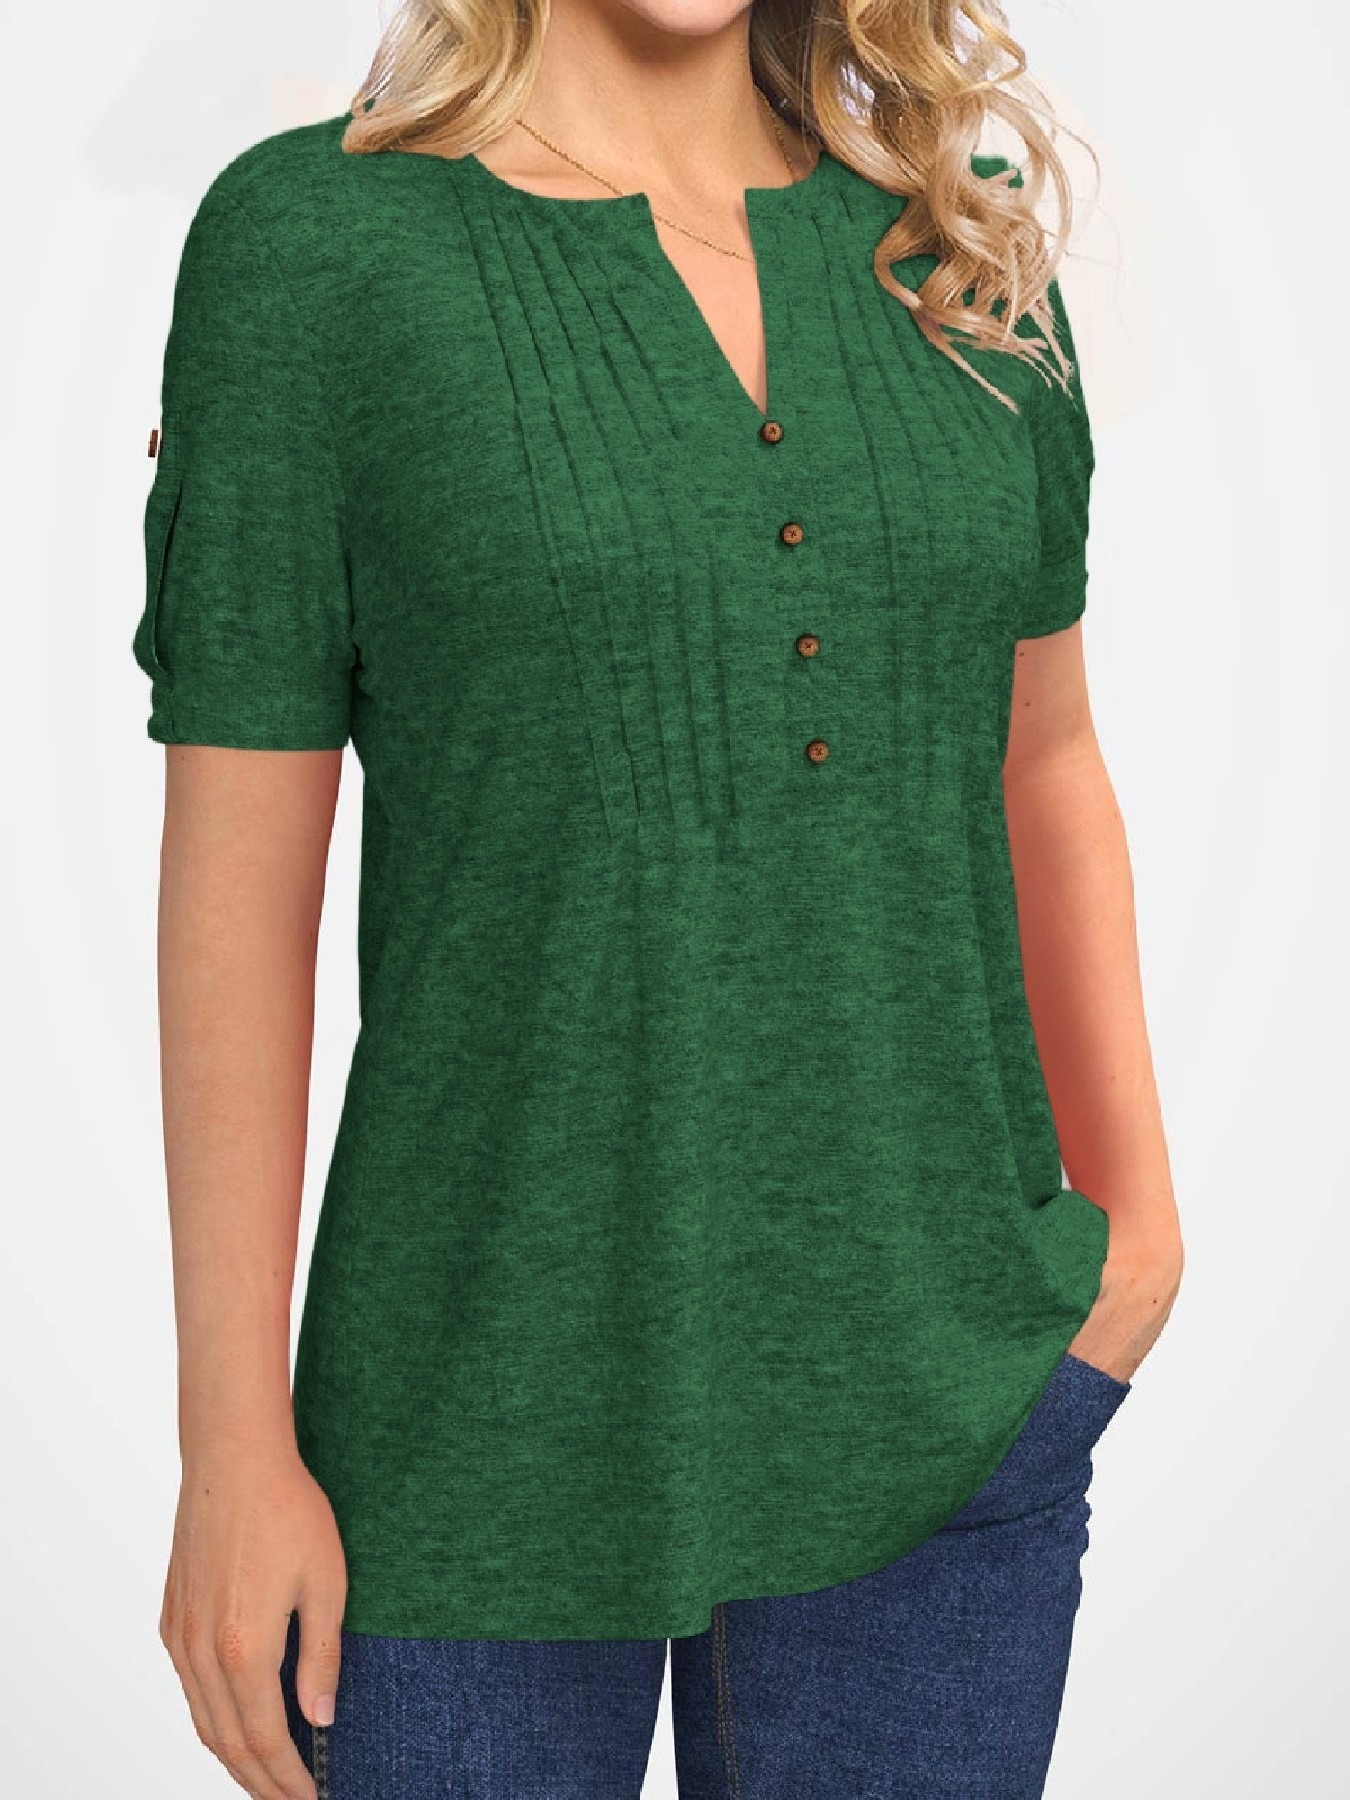 NGTEVOOS Women'S Tshirt Fashion Short Sleeve Turndown Collar Button Casual  Elastic Comfy Blouse Shirts